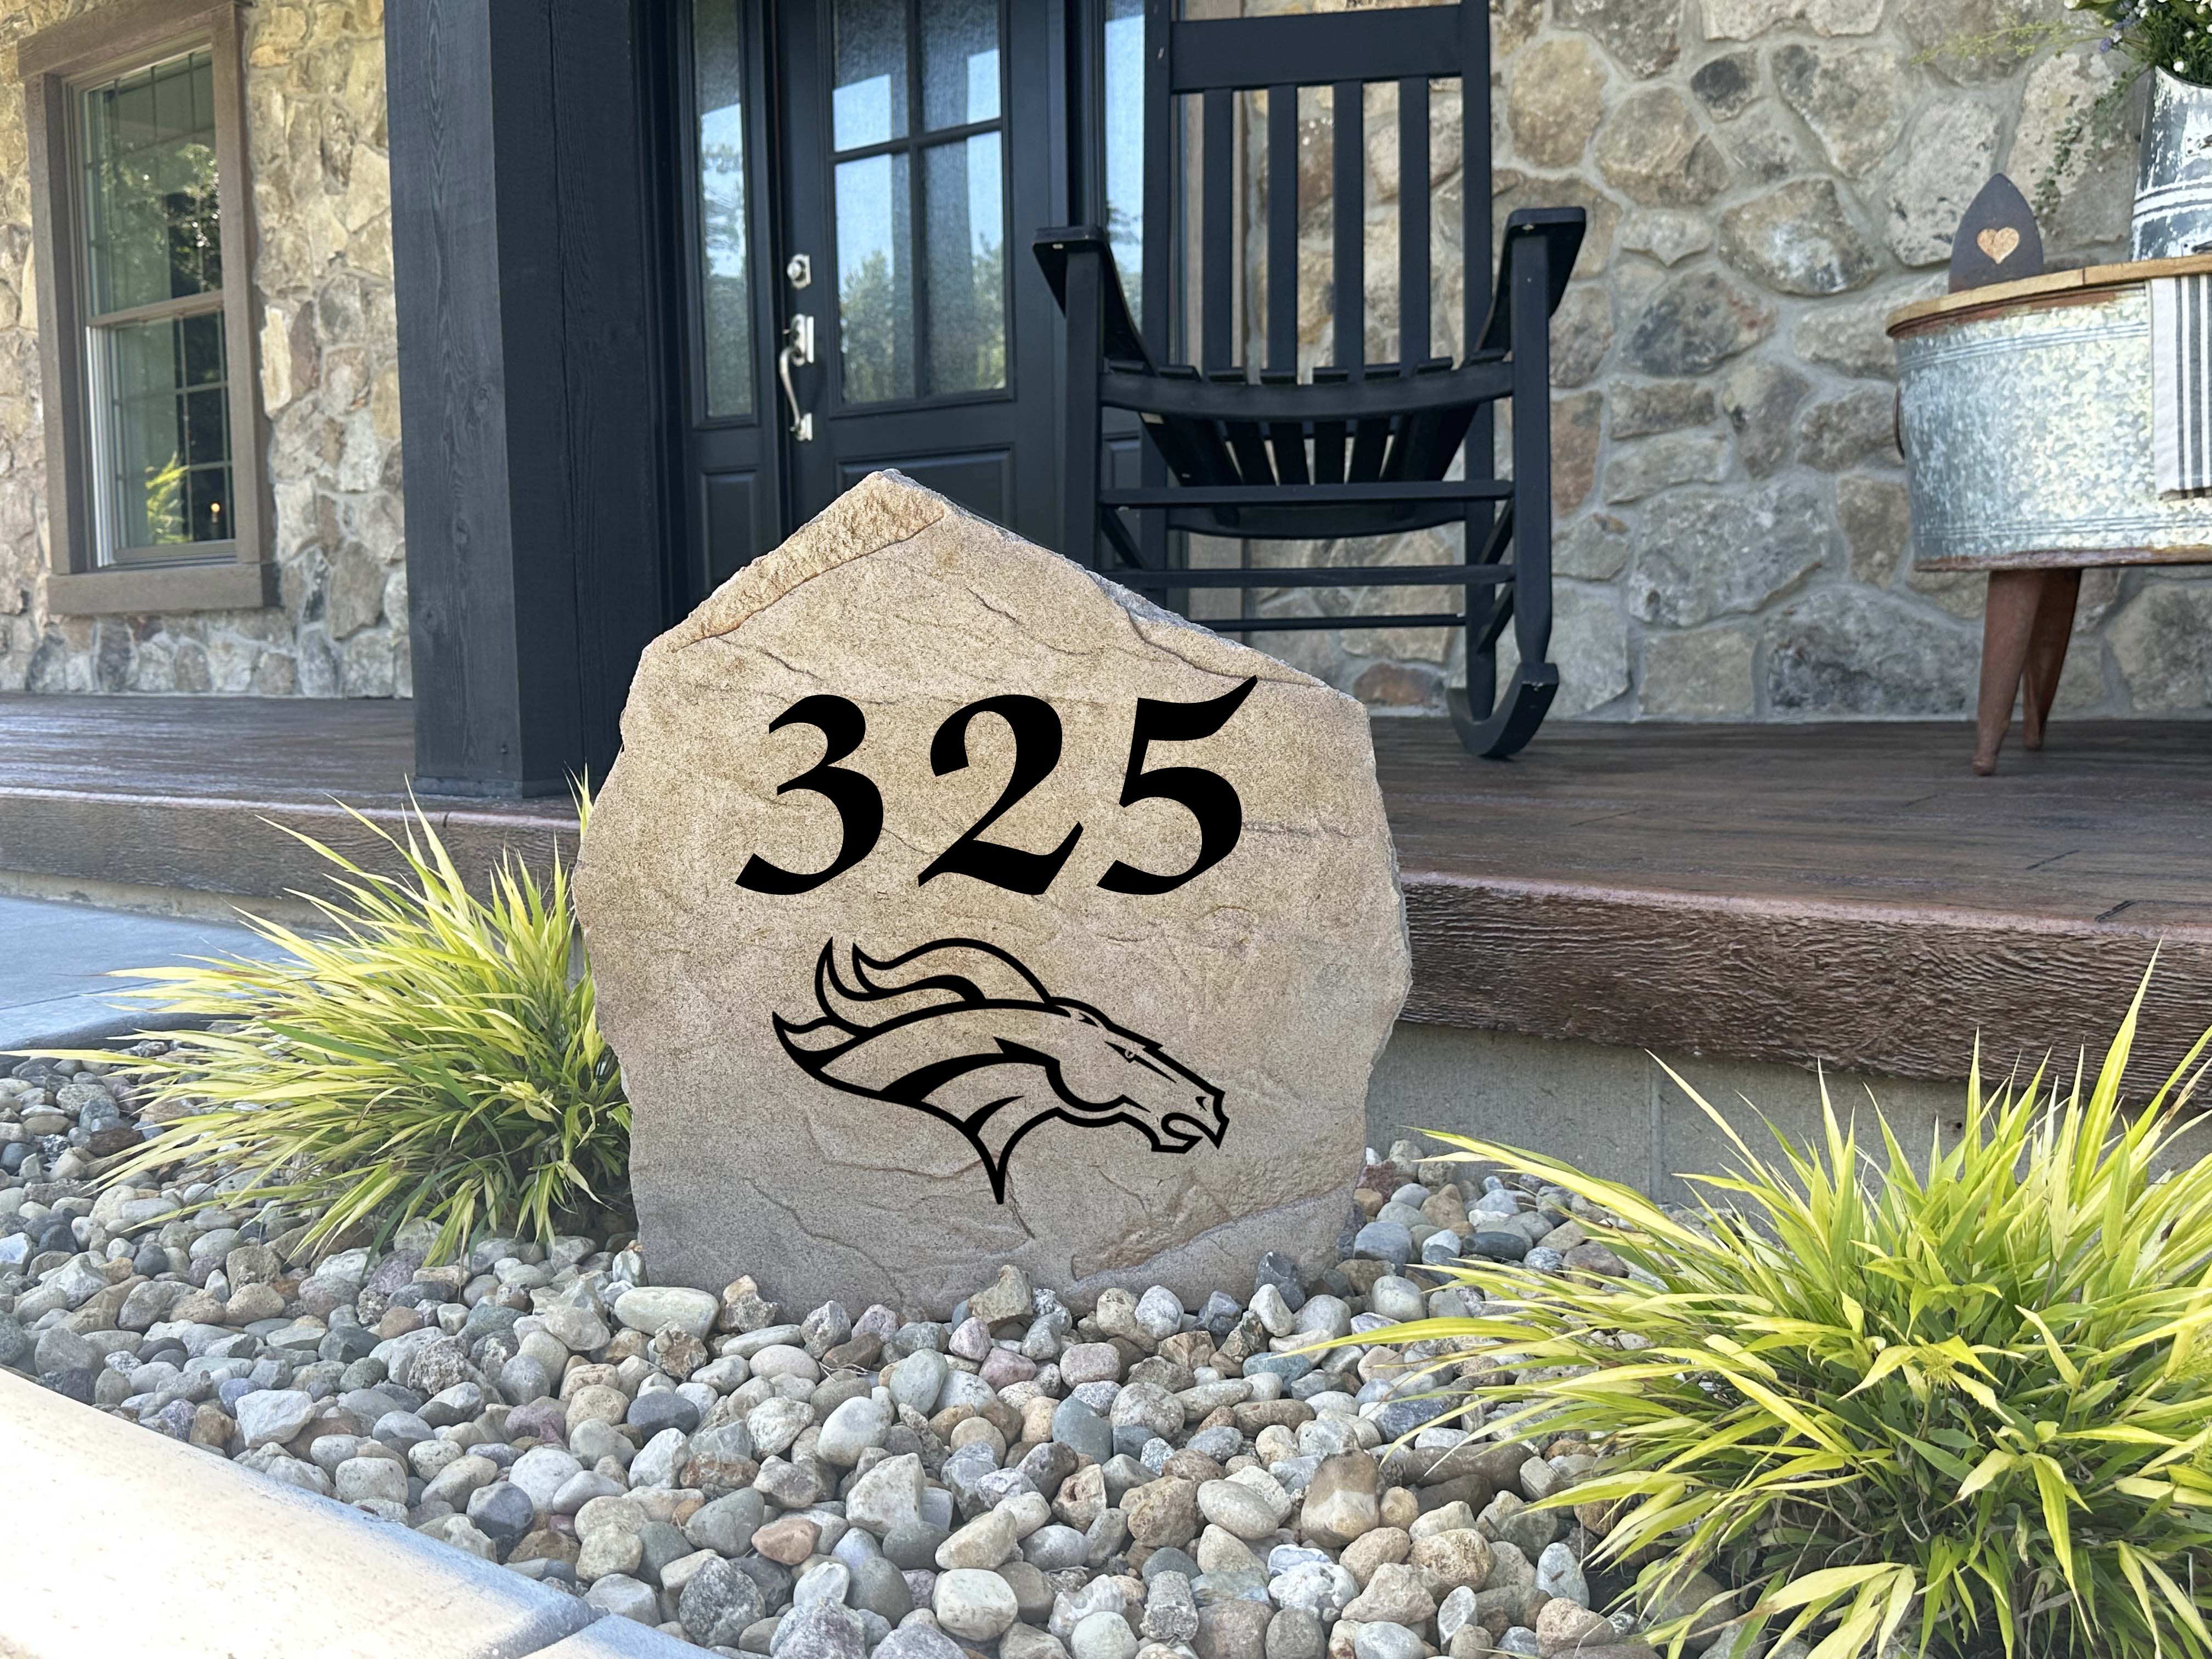 Denver Broncos Design-A-Stone Landscape Art Address Stone